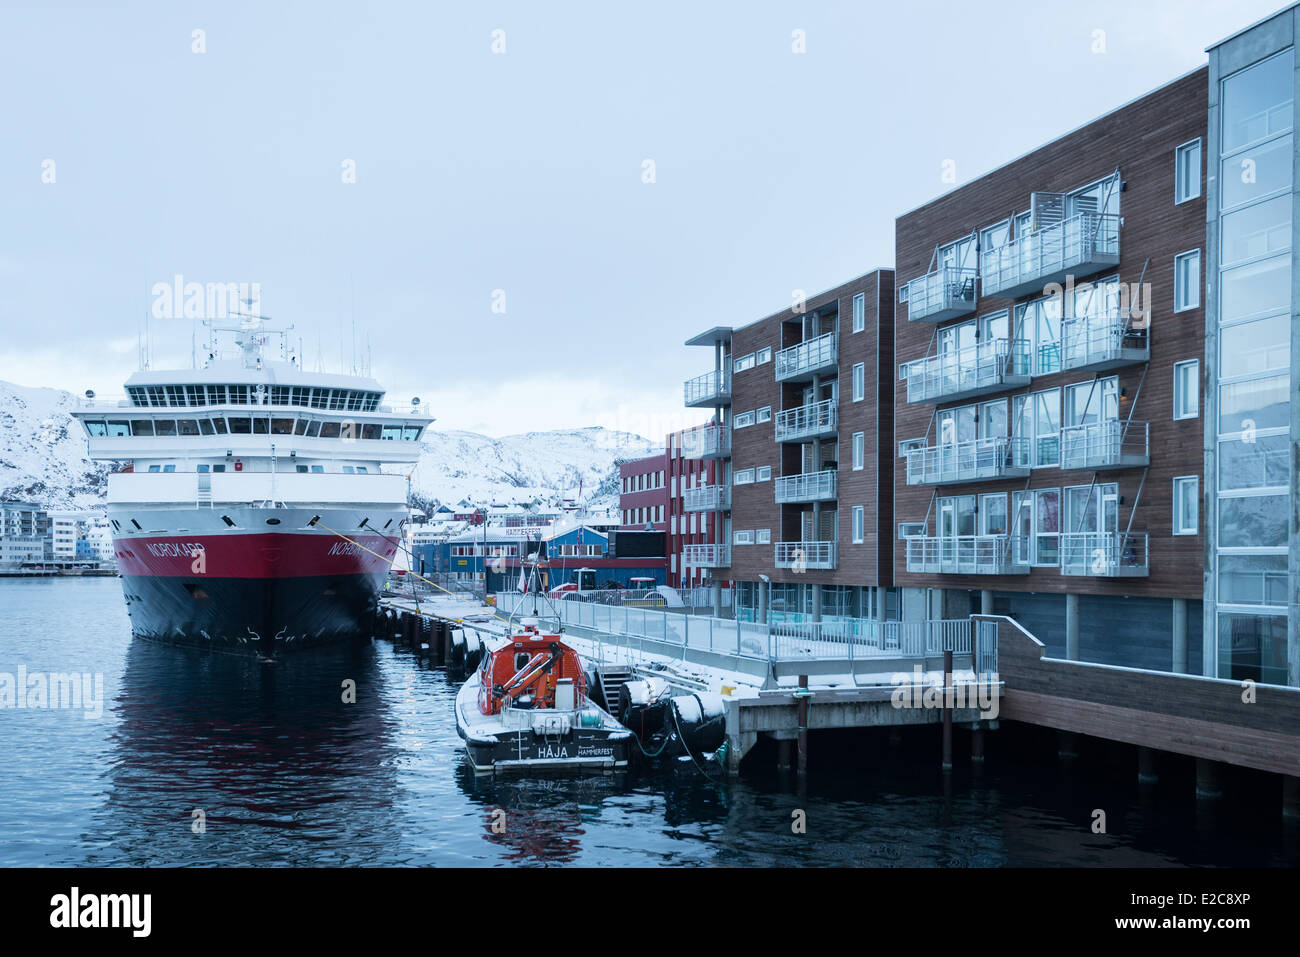 Norway, Finnmark, Hammerfest, the boat Nordkapp of the compagny Hurtigruten at dock Stock Photo